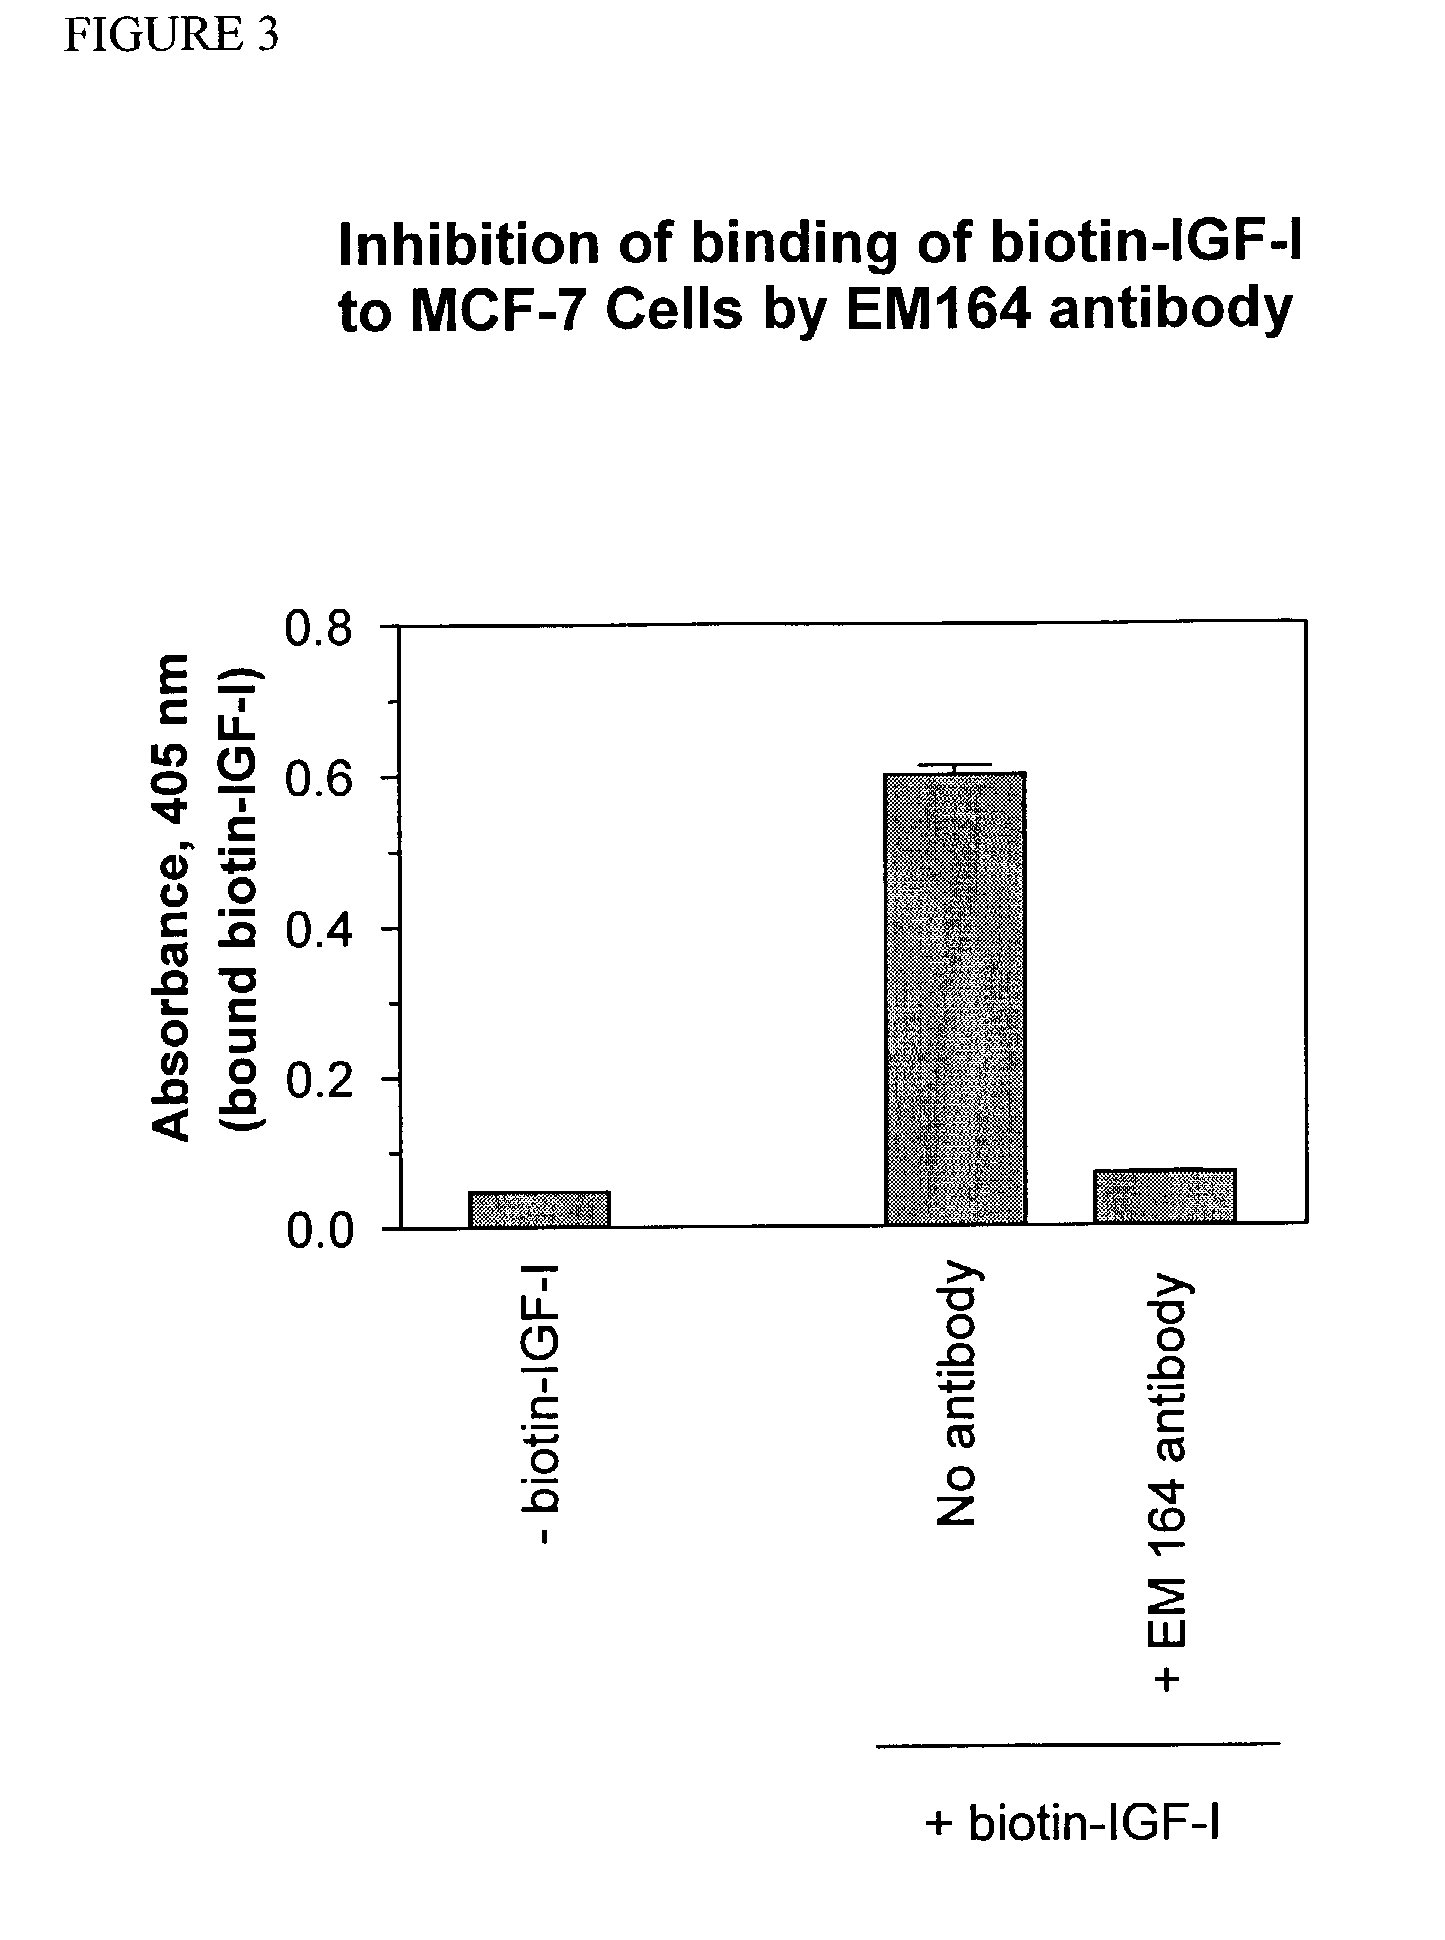 Anti-IGF-I receptor antibody